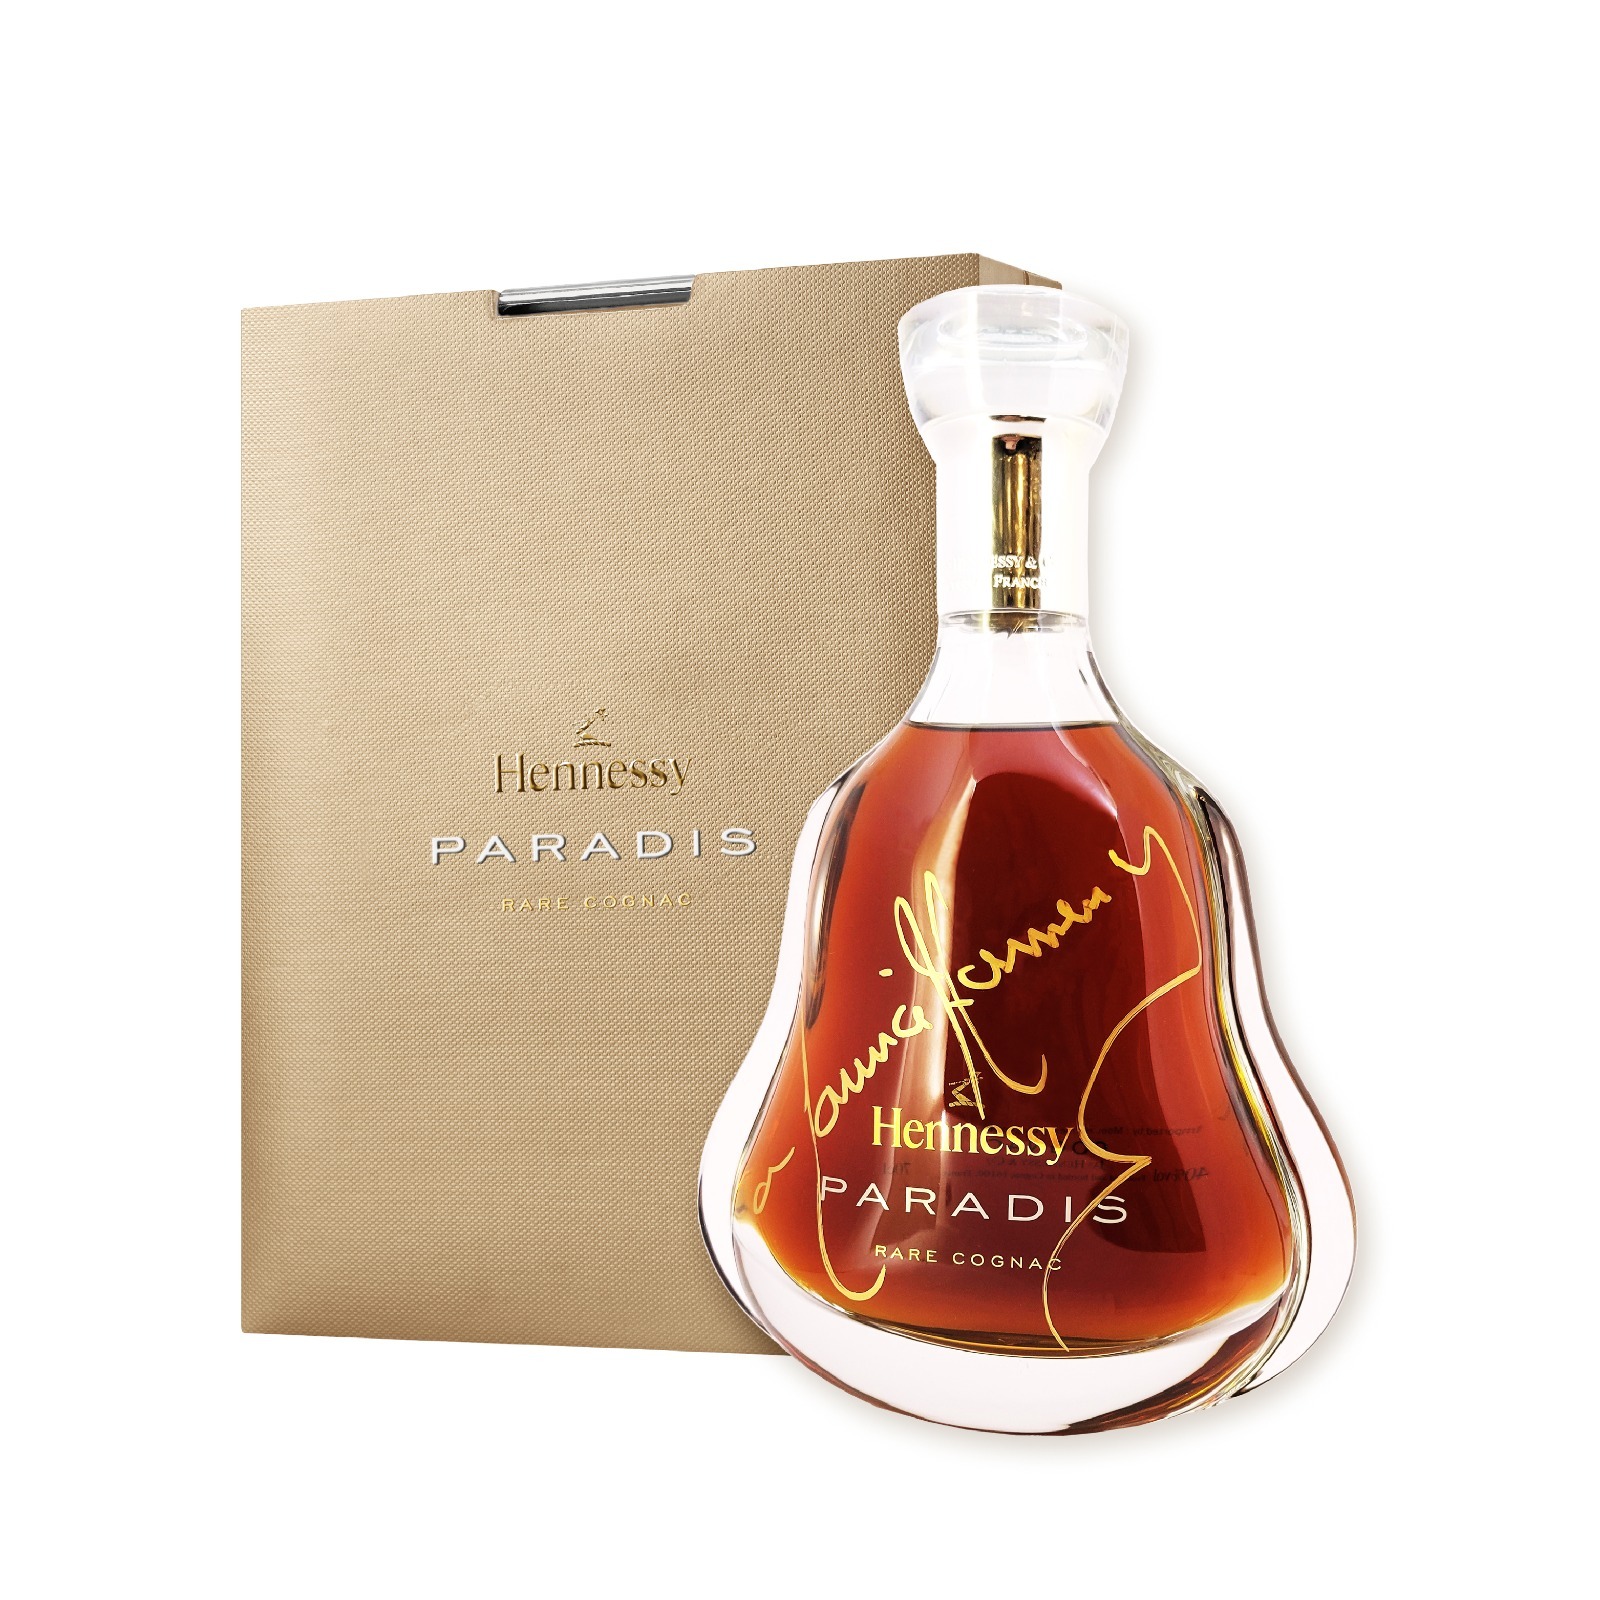 Hennessy Paradis Cognac signature edition 700ml